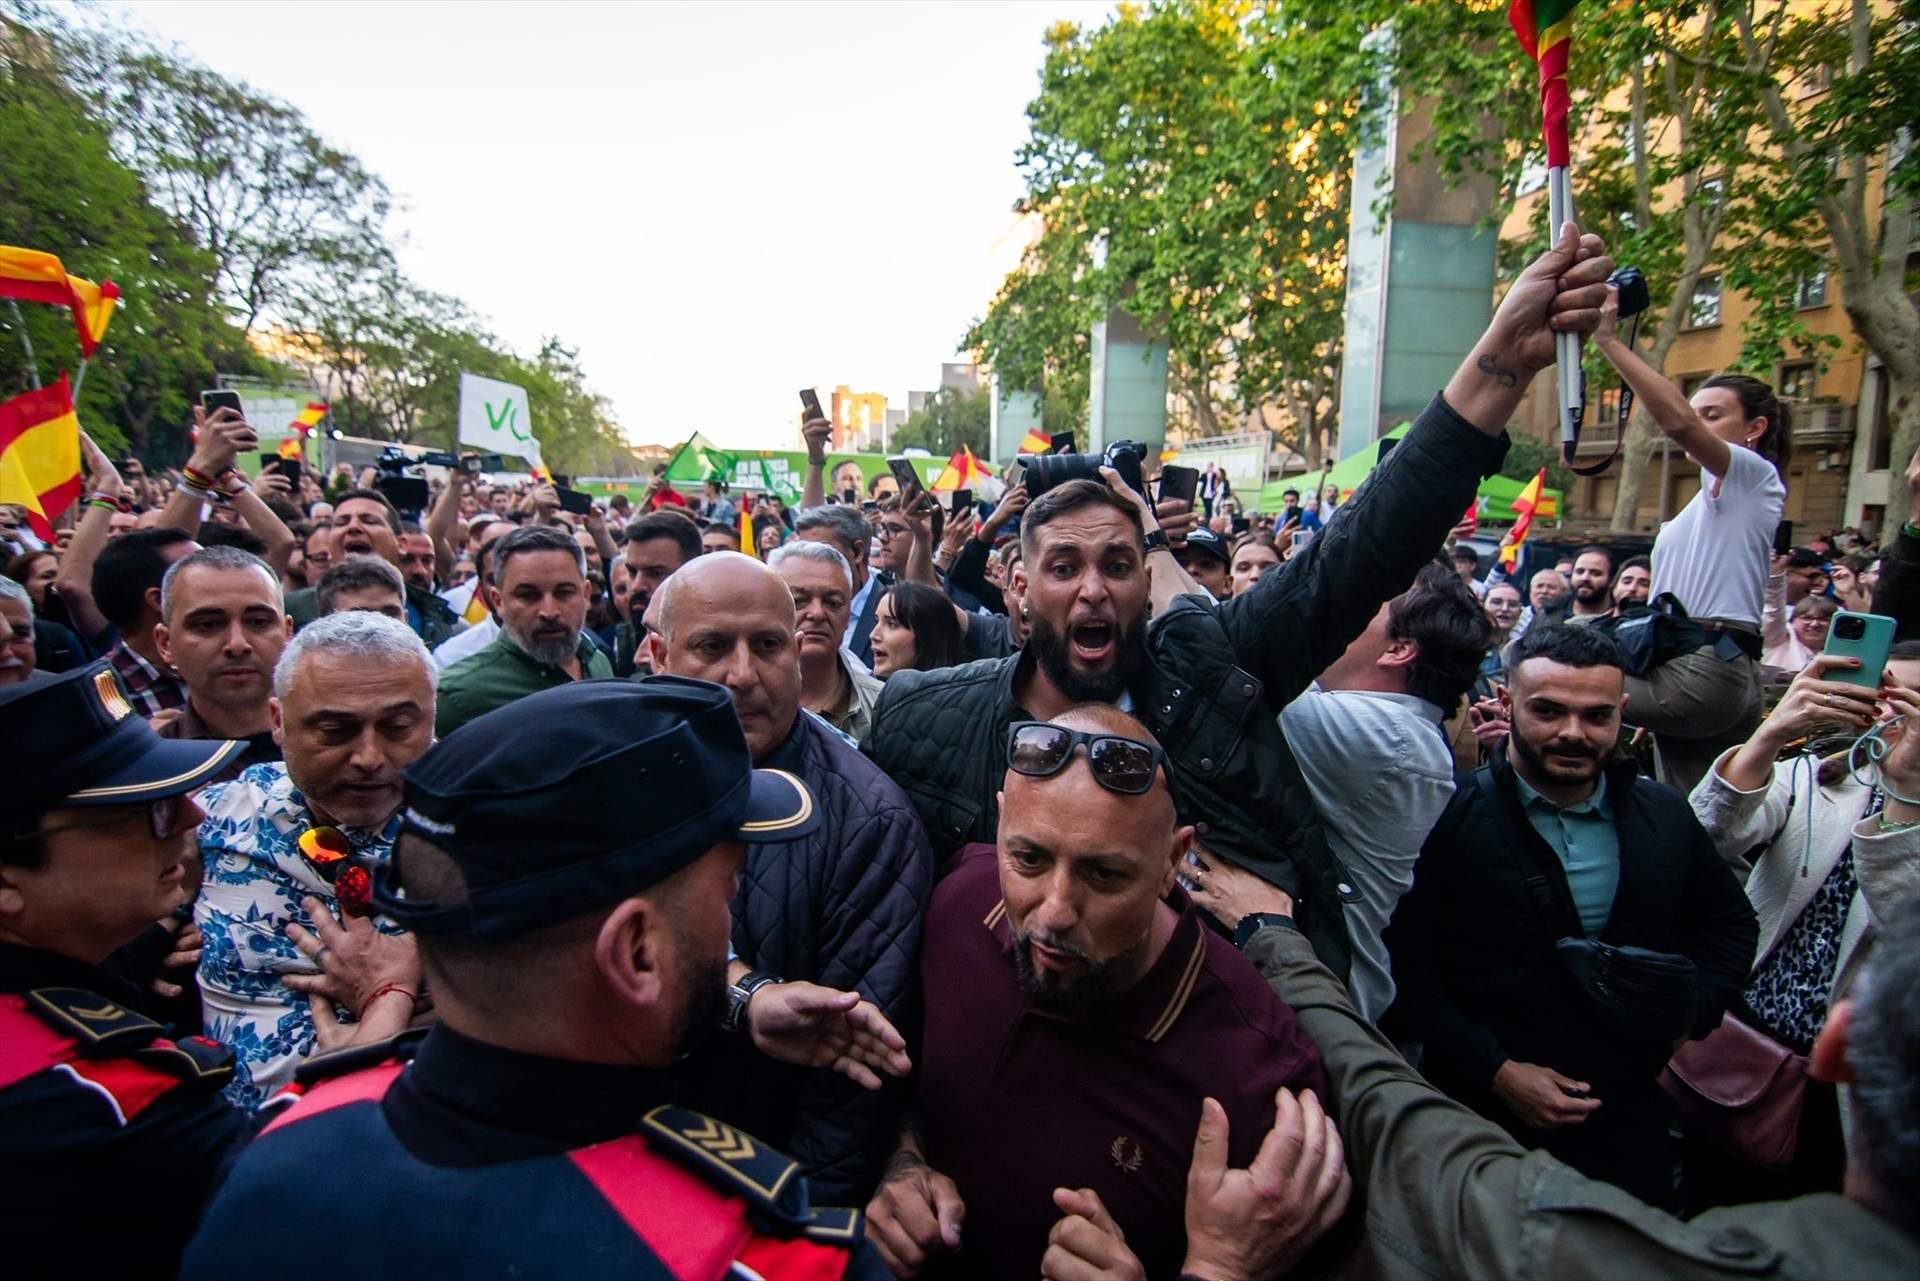 Abascal s'encara a uns manifestants antifeixistes a Reus